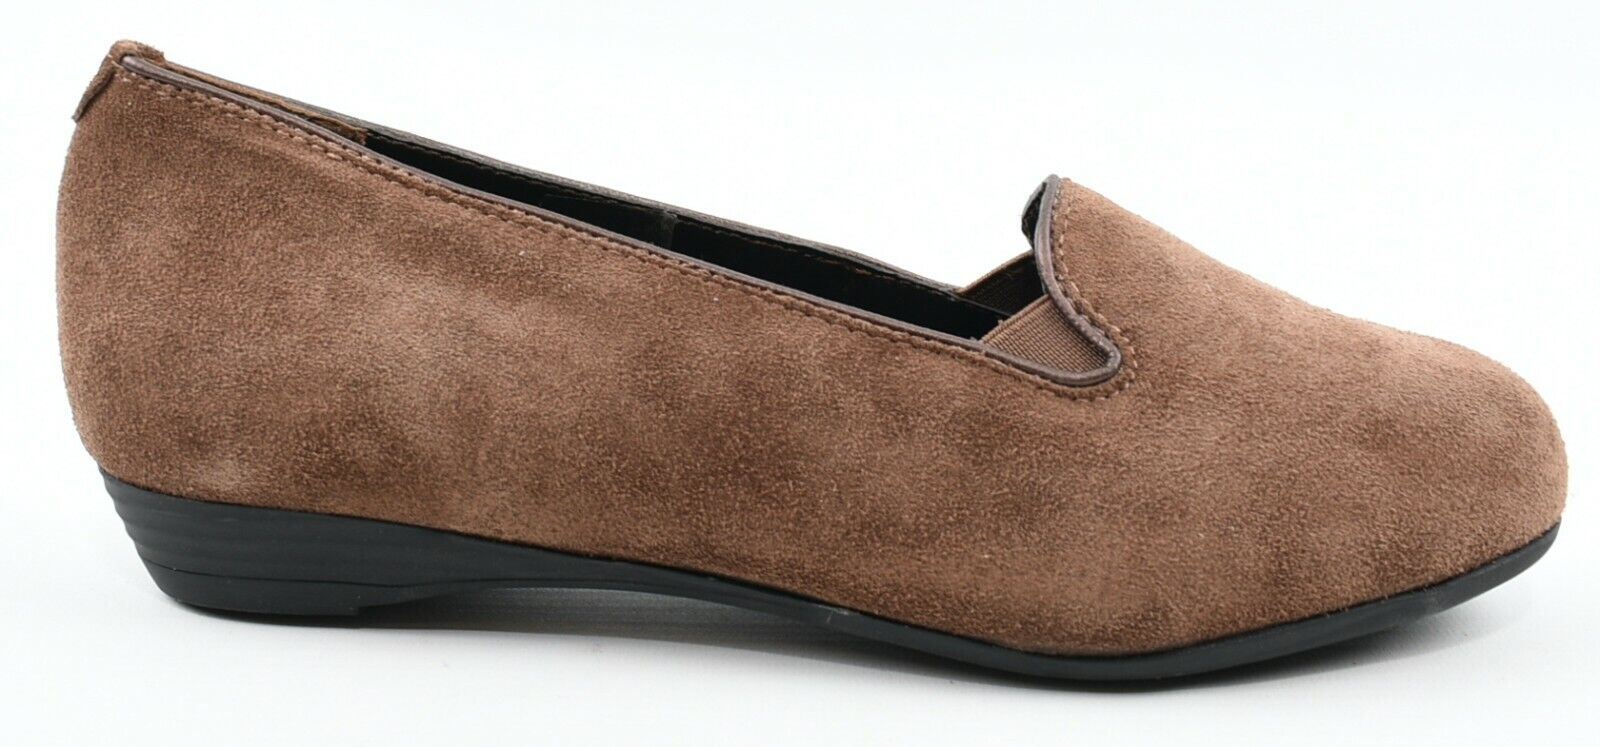 SCHOLL Women's LEDA Closed Toe Flat Shoes, Earth Brown, size UK 4 EU 37